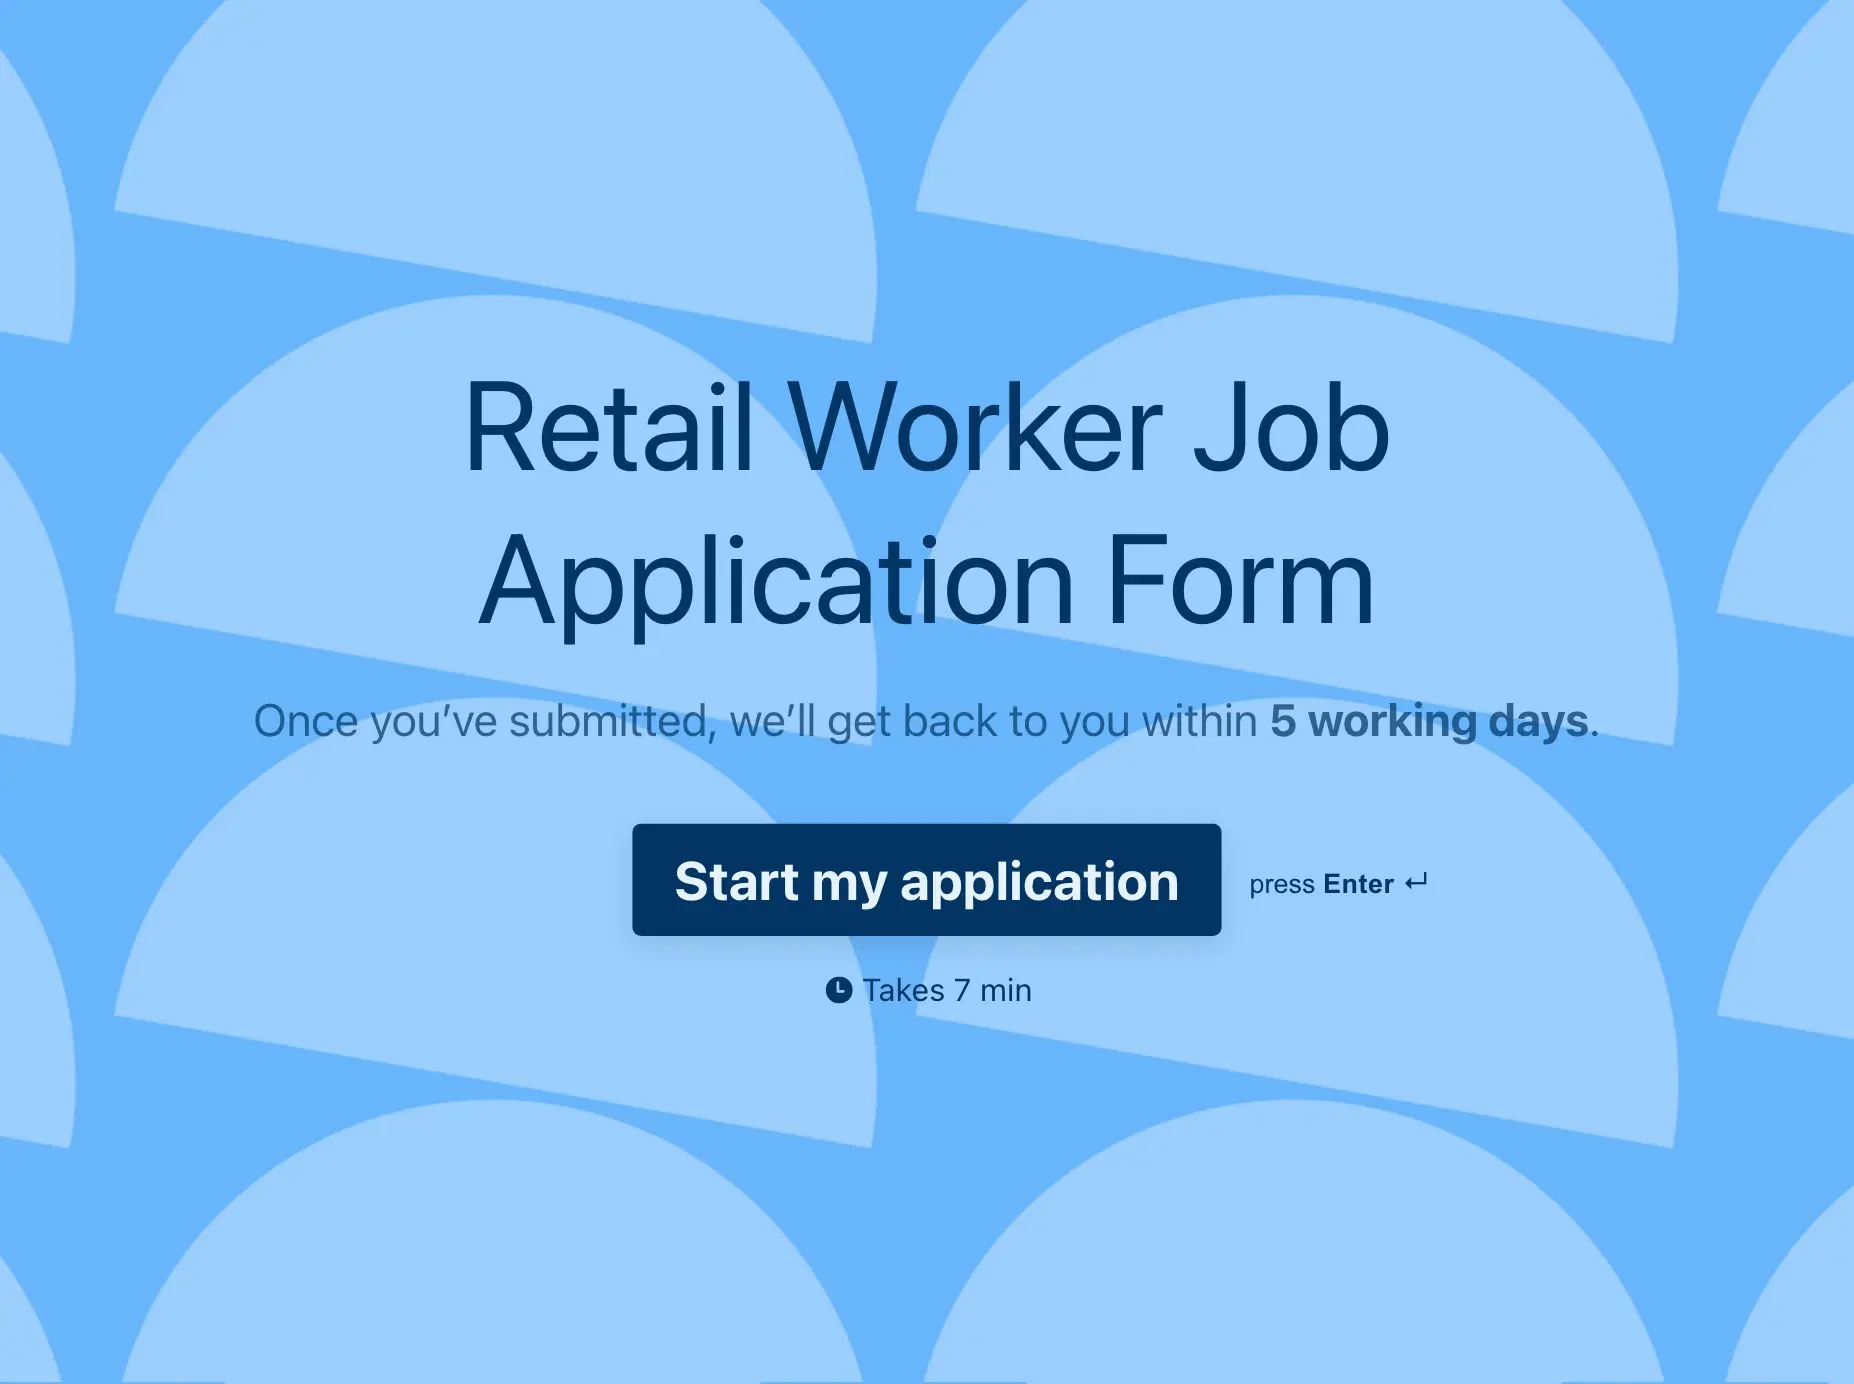 Retail Worker Job Application Form Template Hero